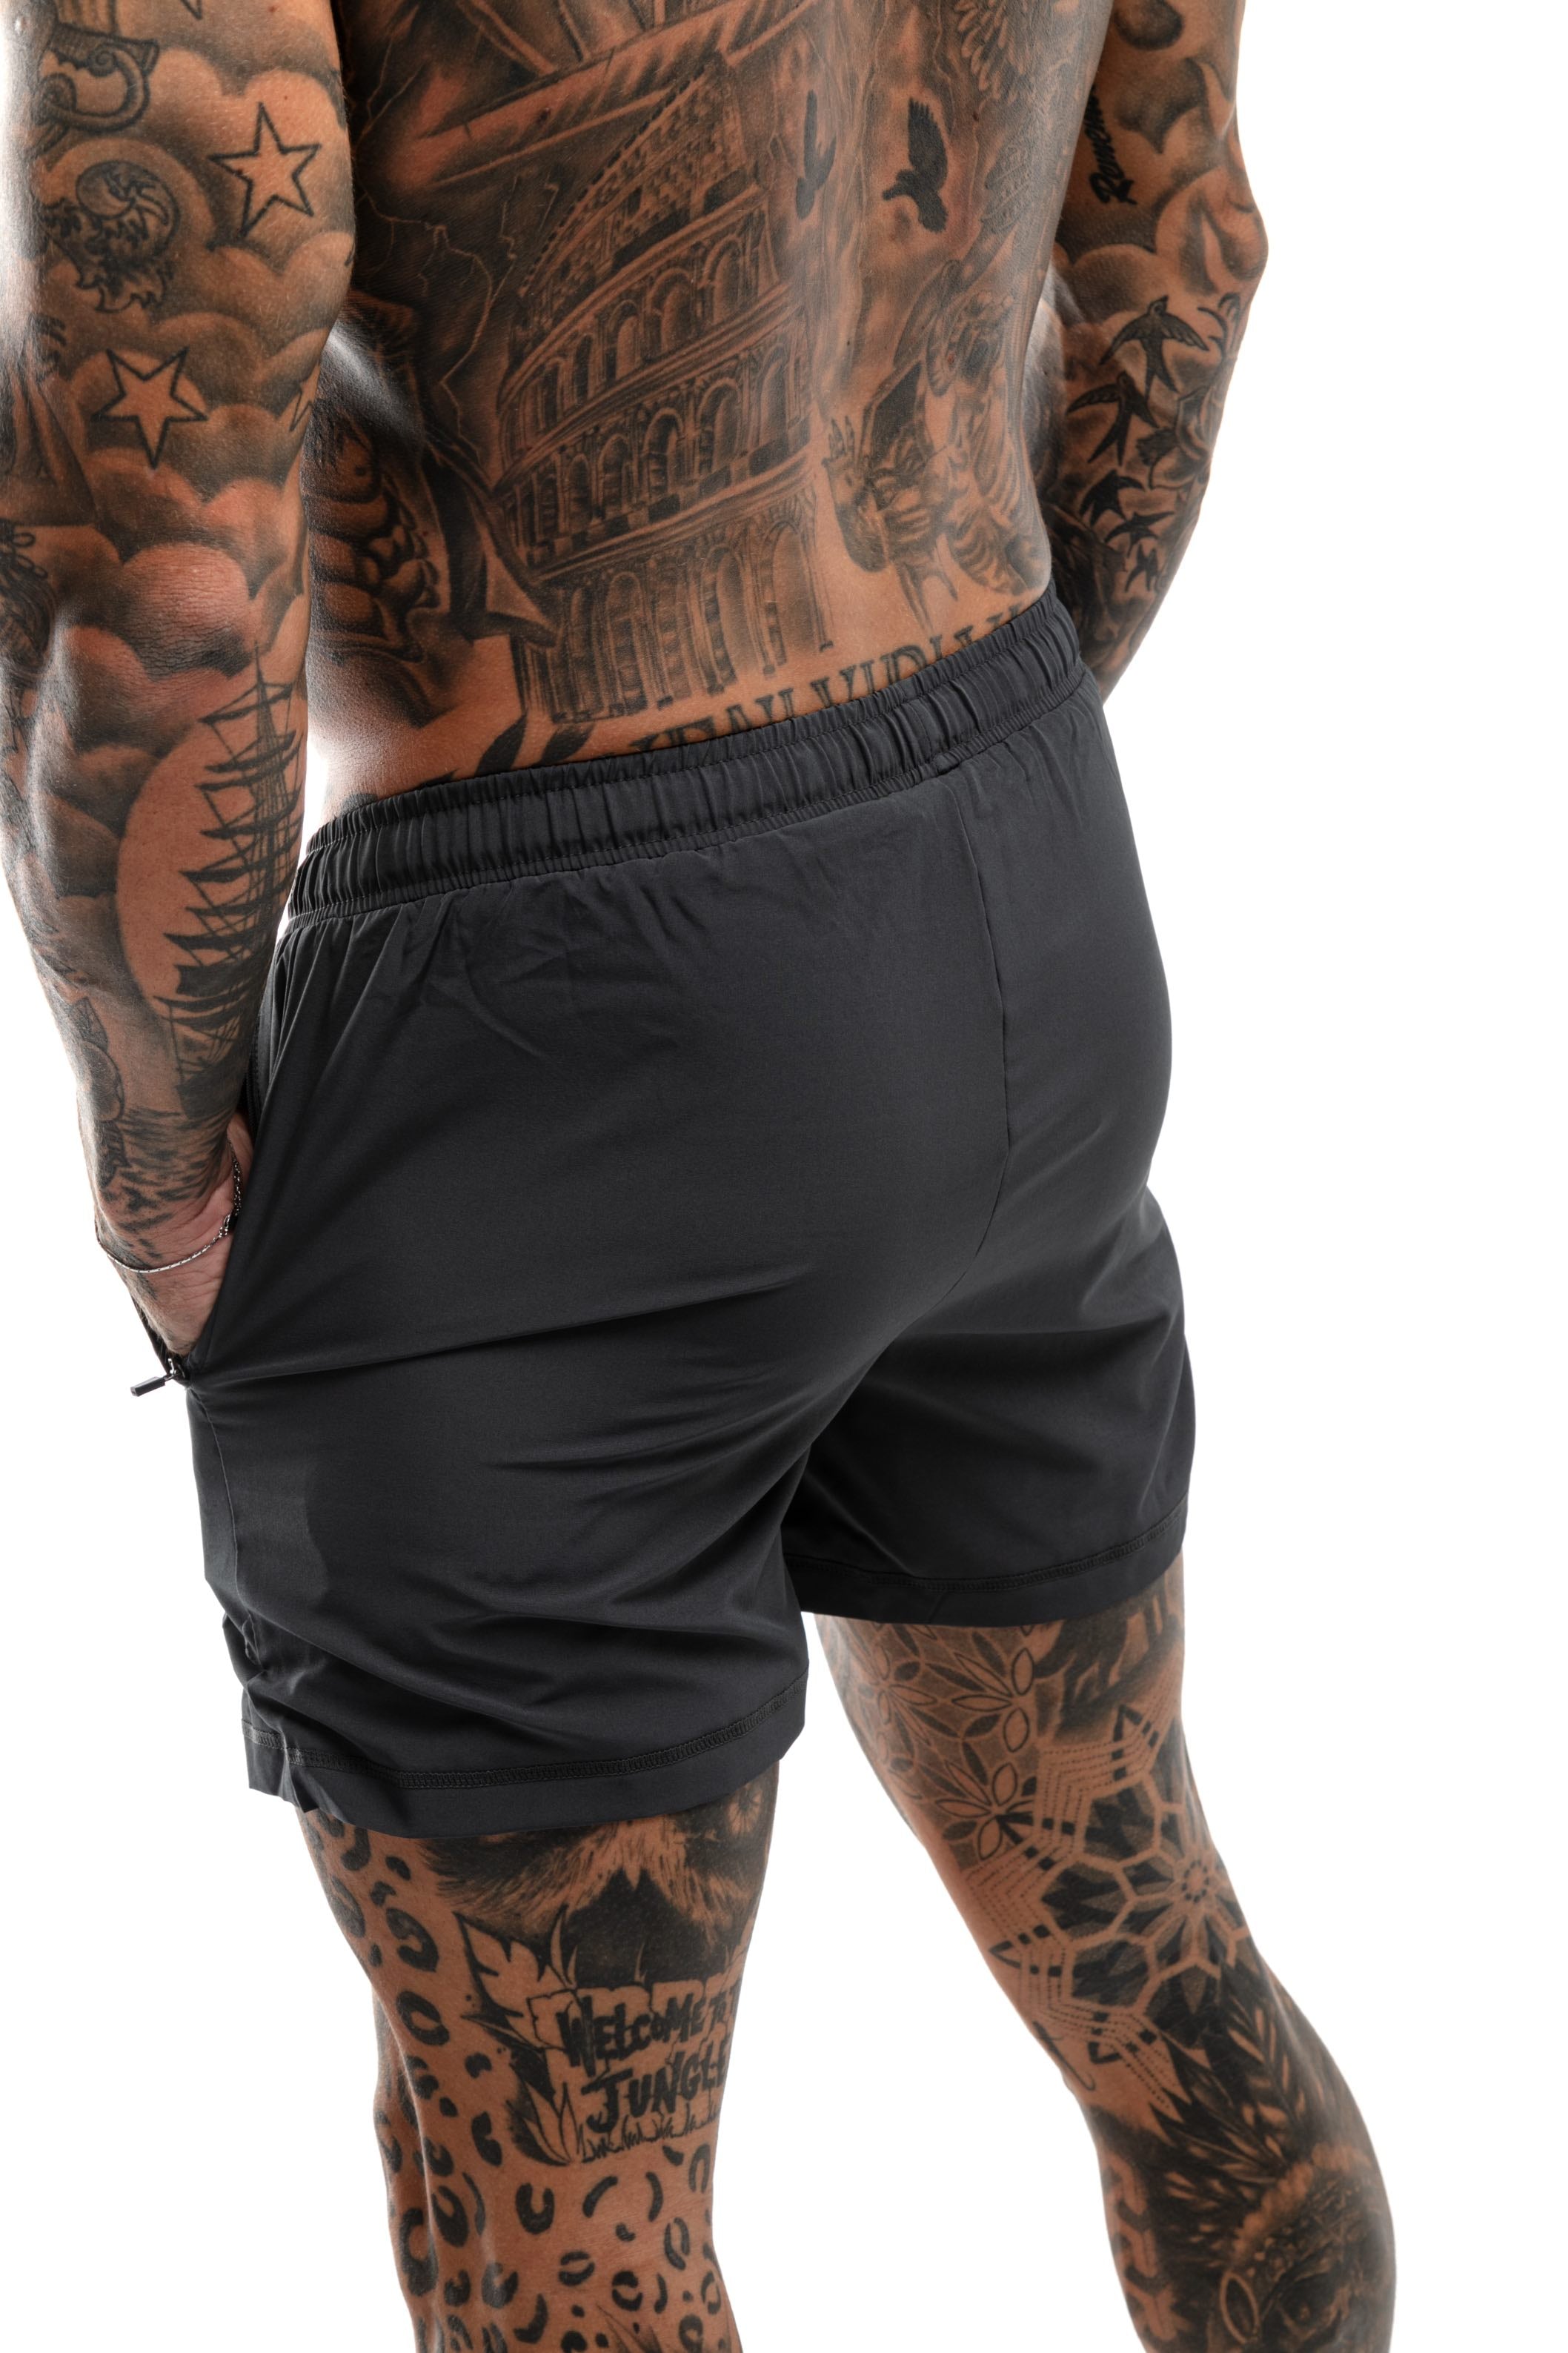 GymFreak Mens 365 Shorts - Charcoal - 3.5inch